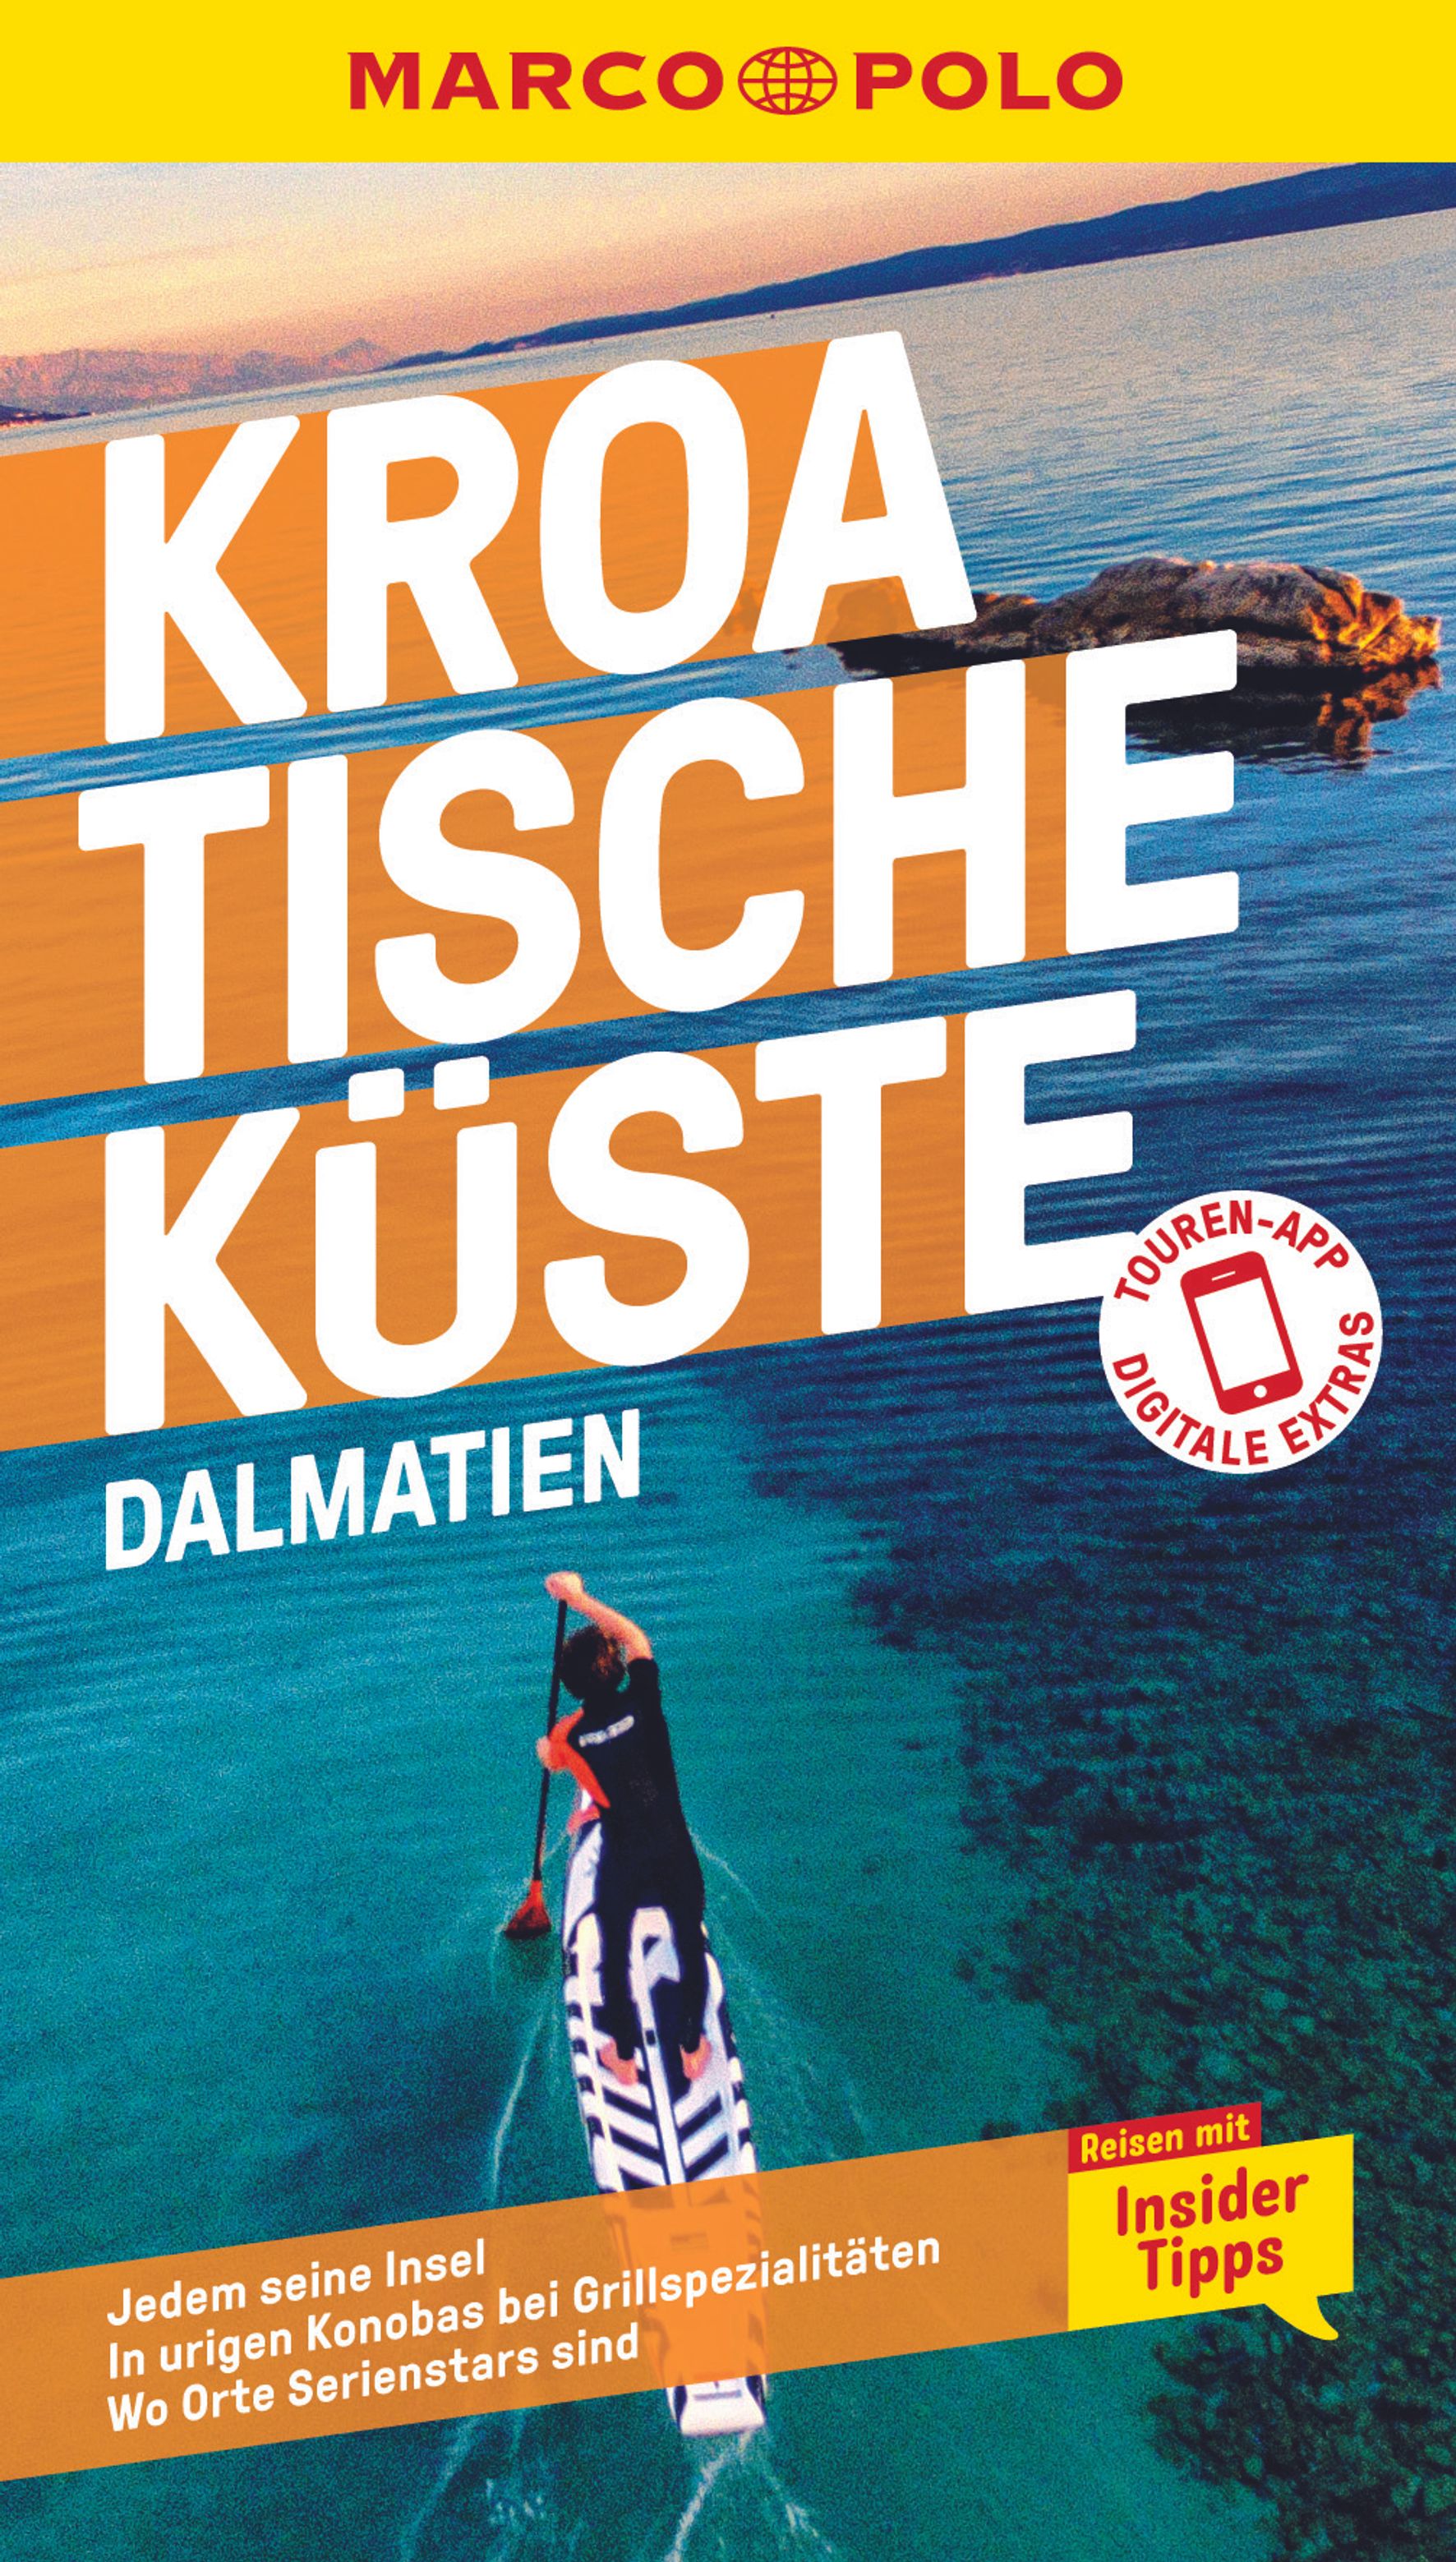 MAIRDUMONT Kroatische Küste Dalmatien (eBook)